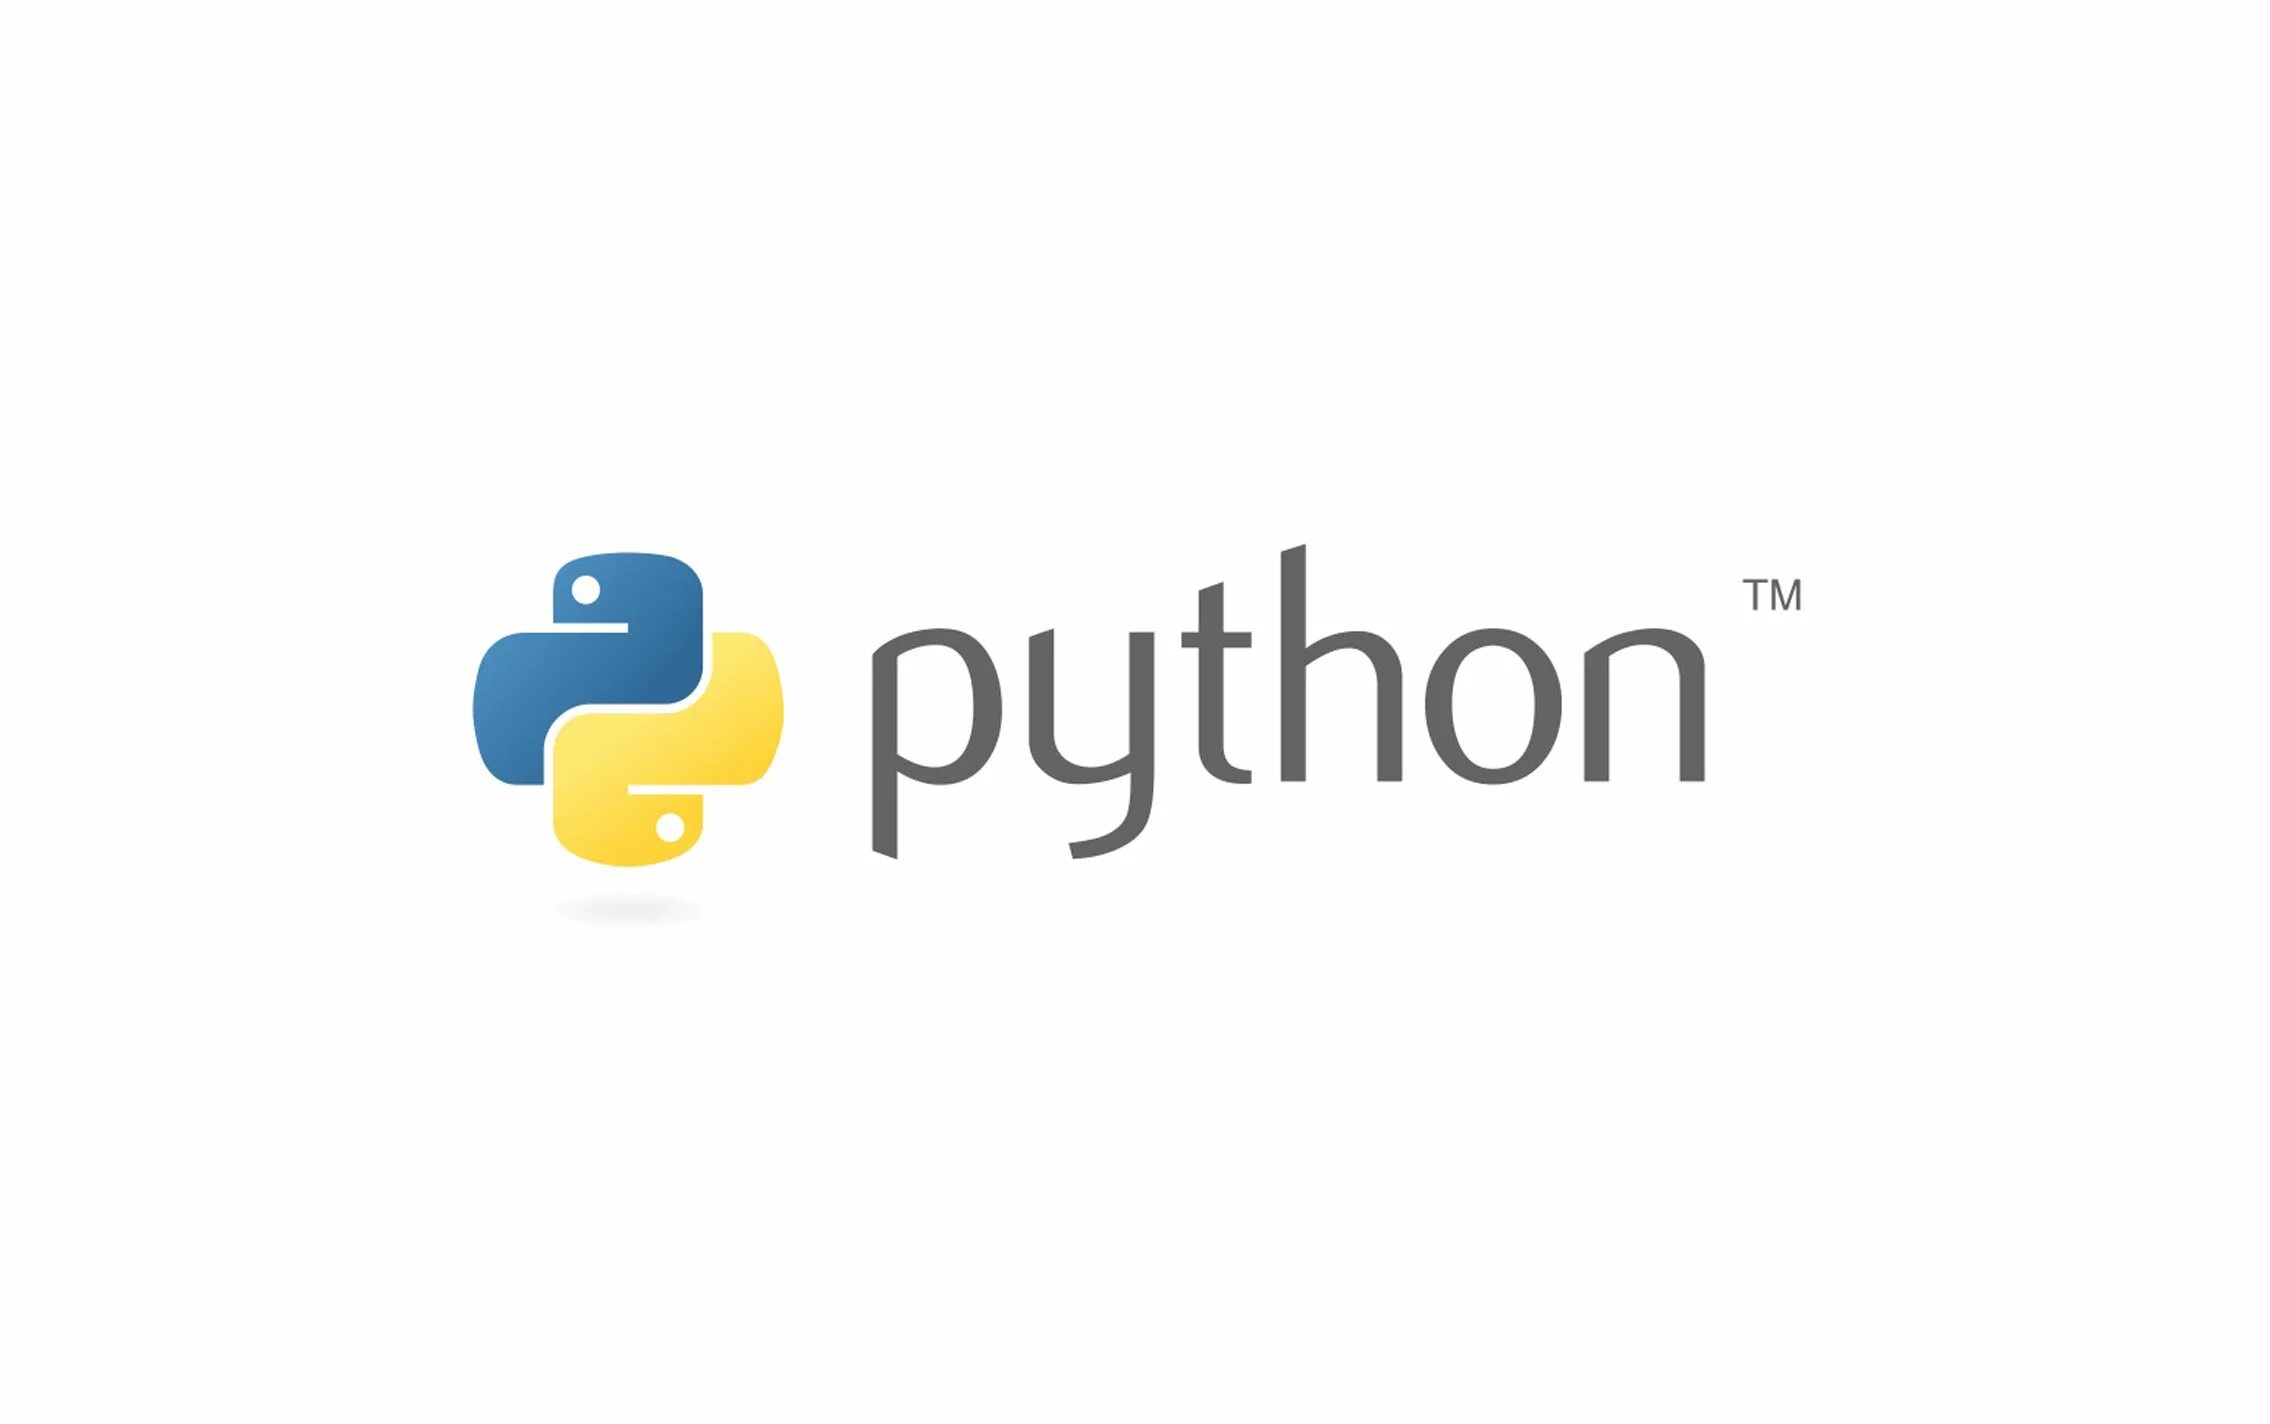 Python org